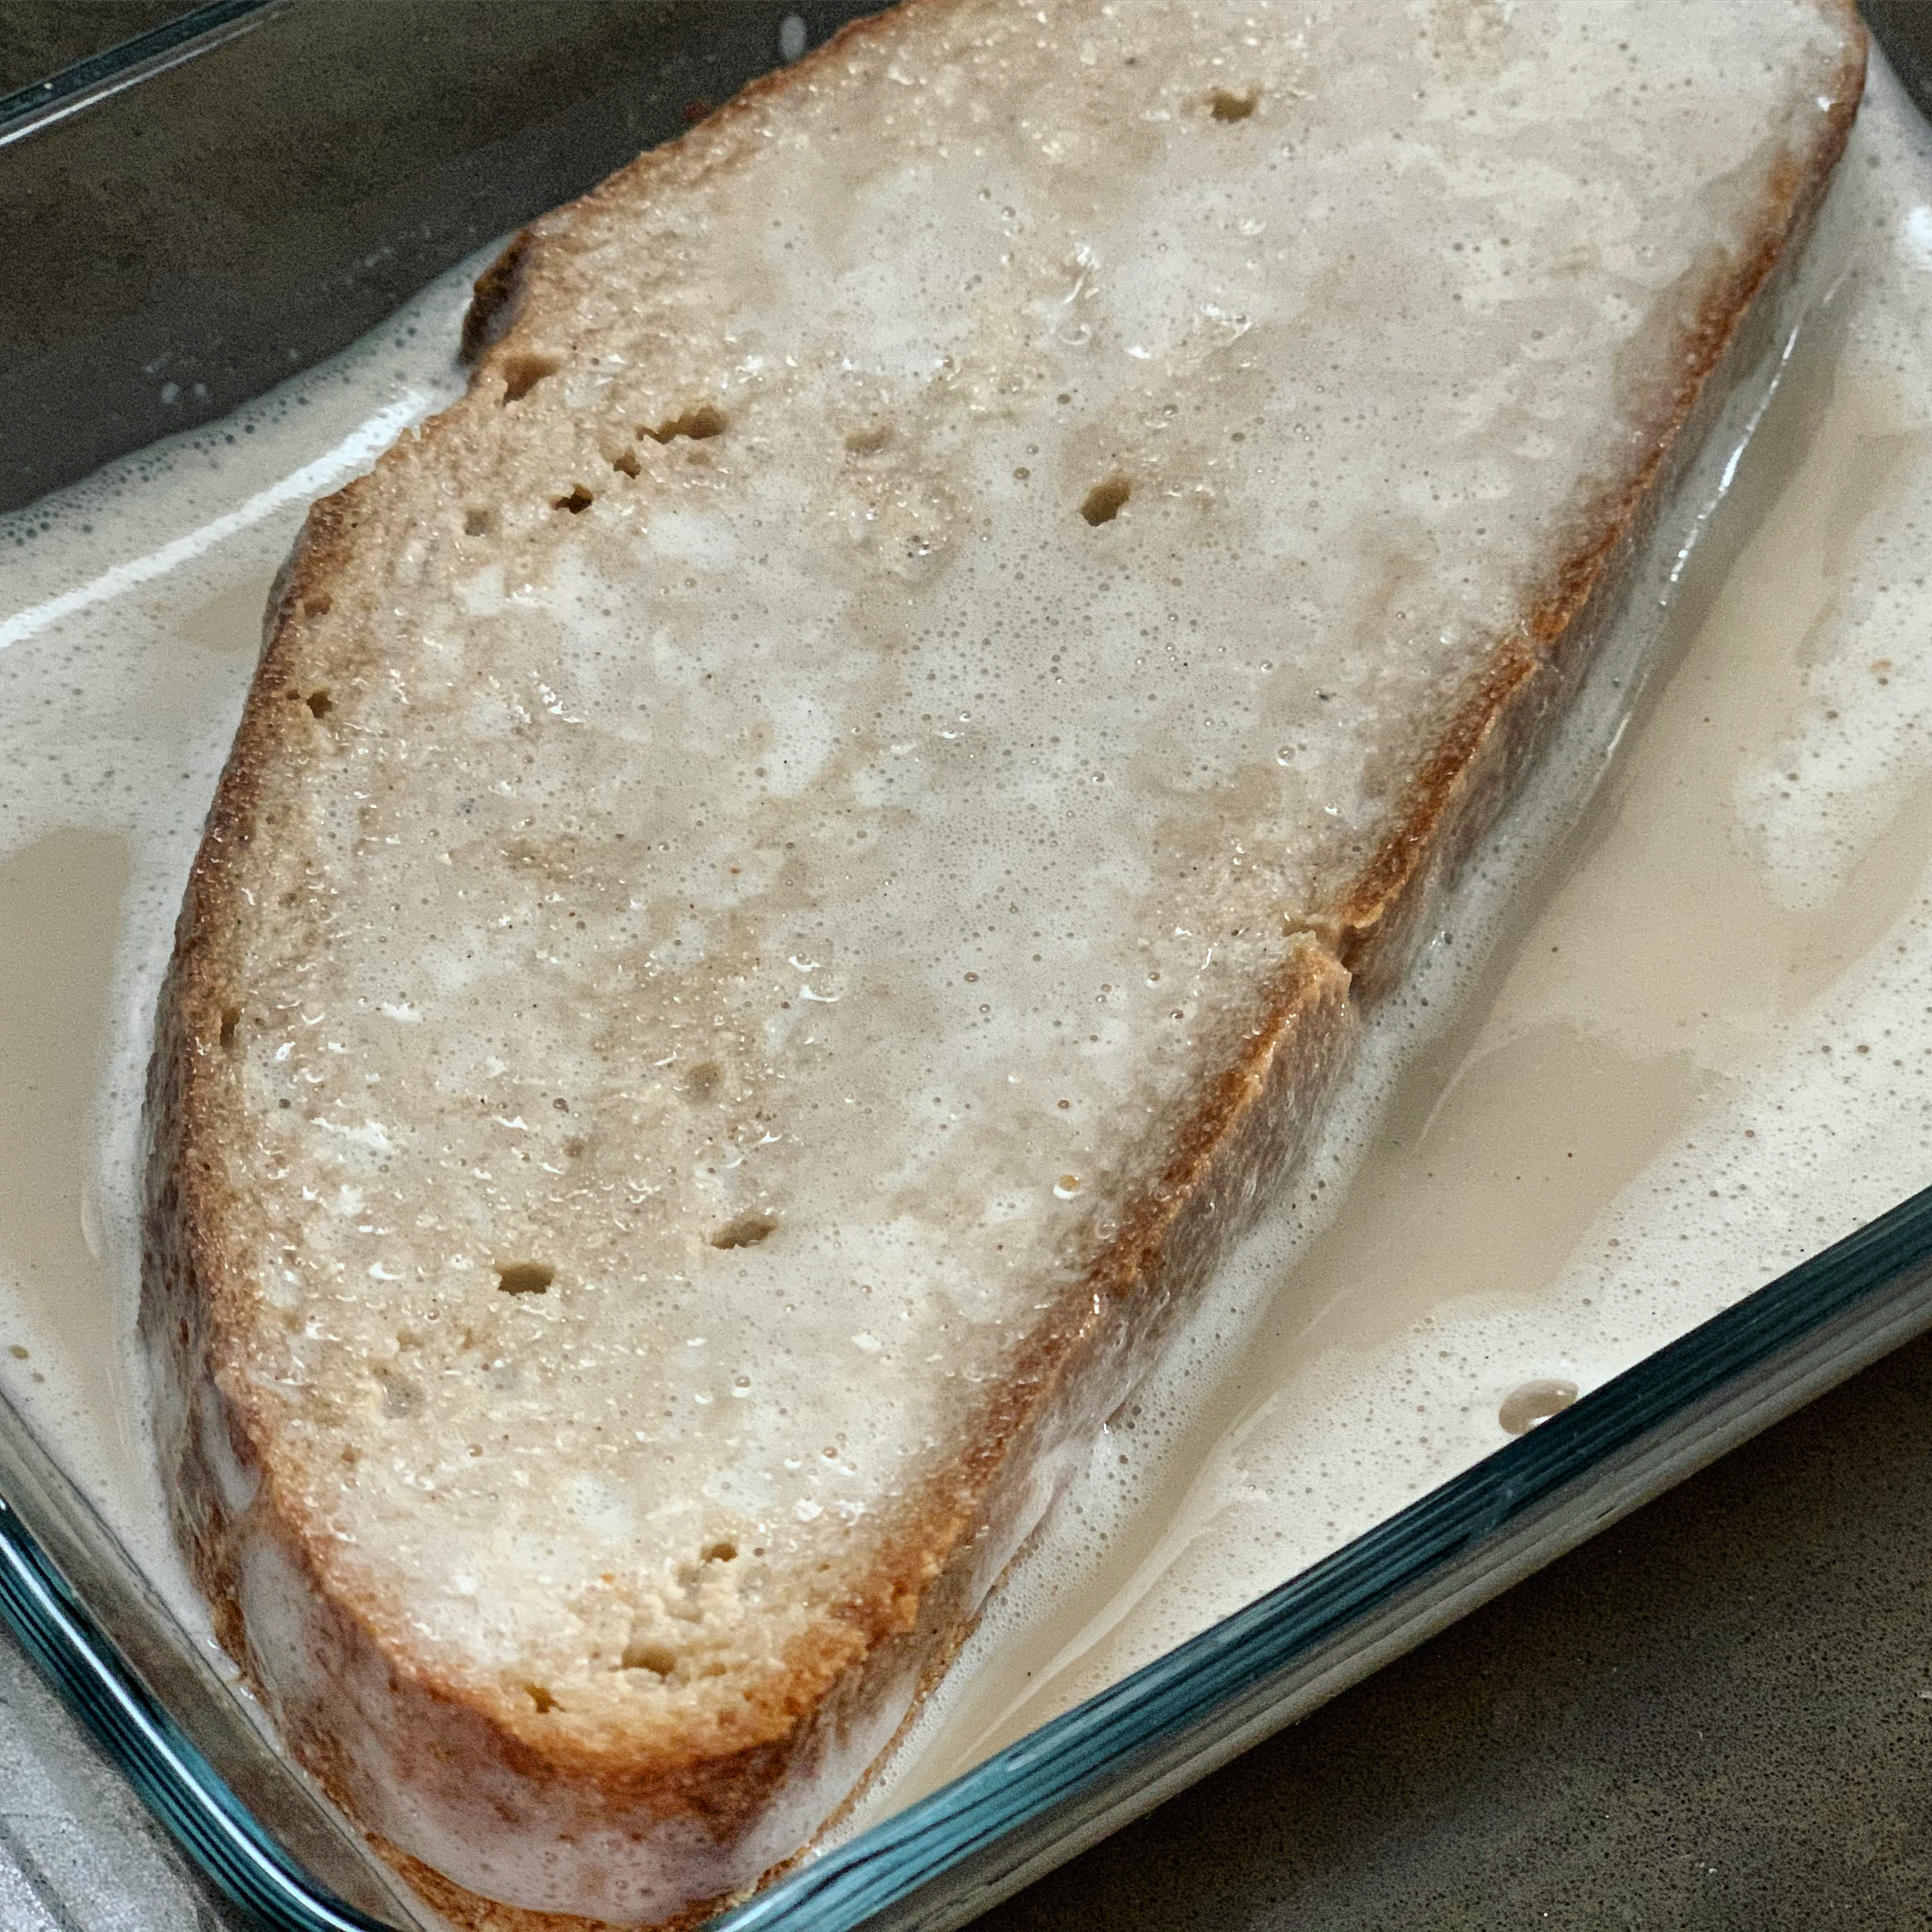 Soaking GF sourdough for vegan french toast